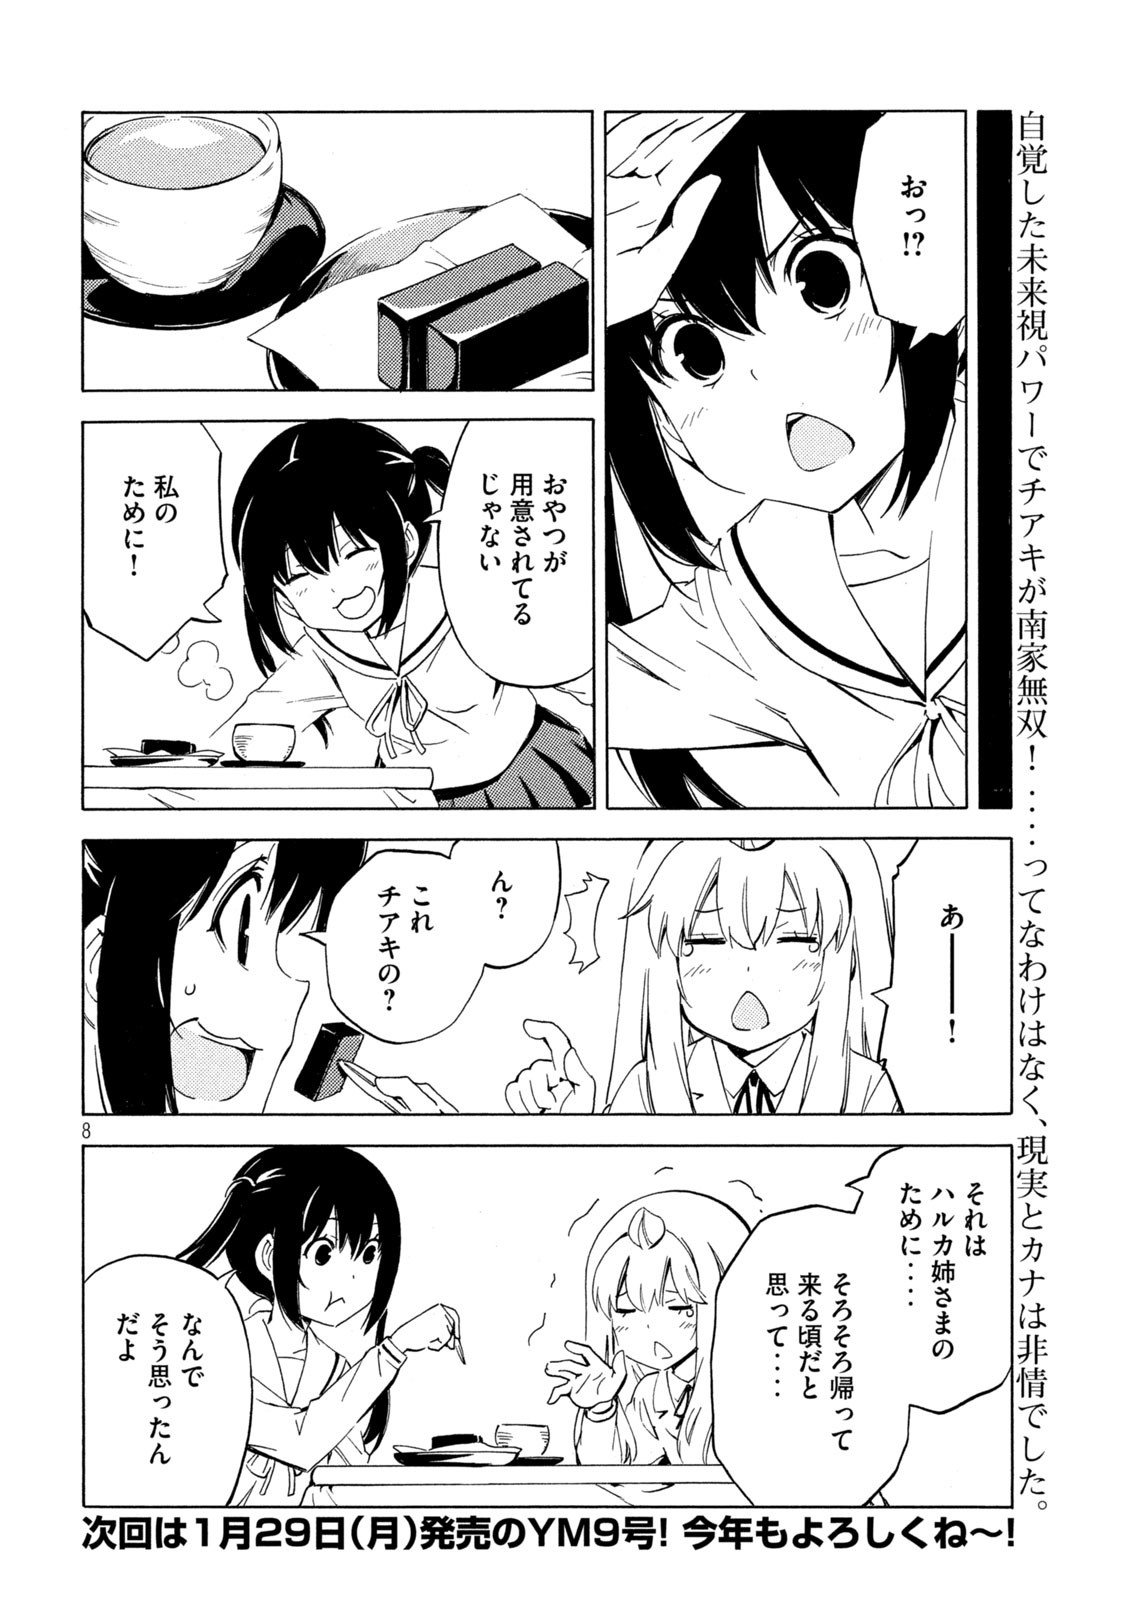 Minami-ke - Chapter 476 - Page 8